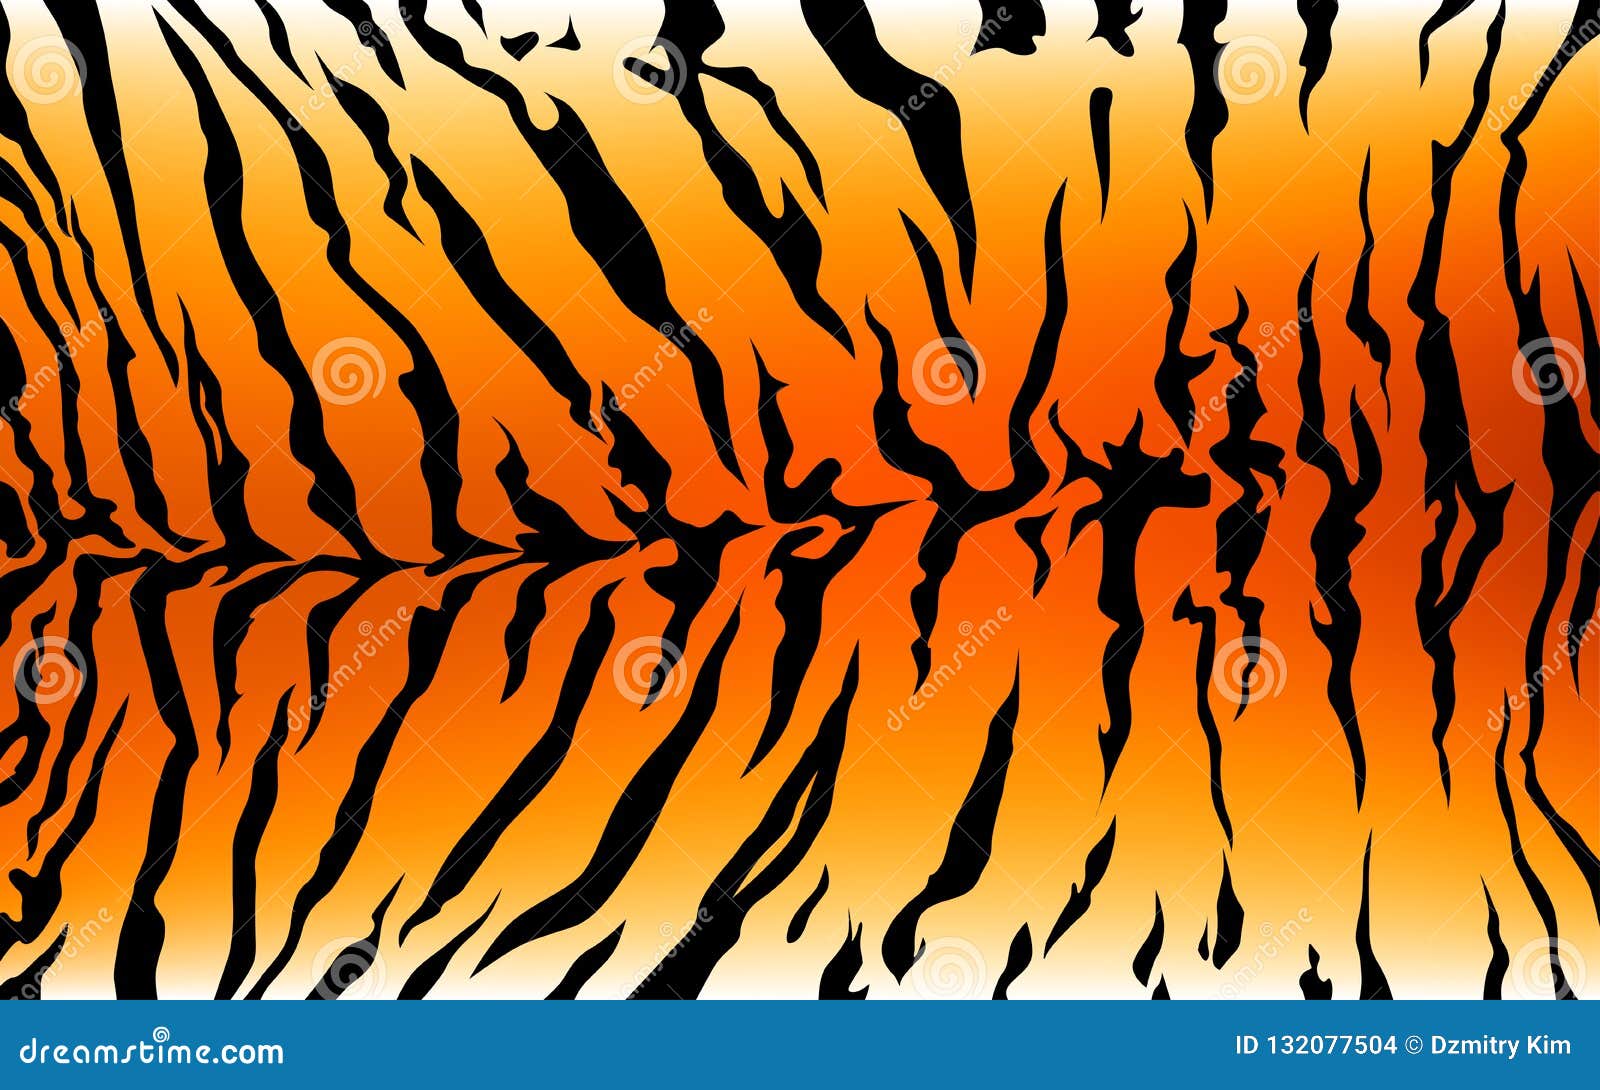 print stripe animals jungle tiger fur texture pattern white orange yellow black